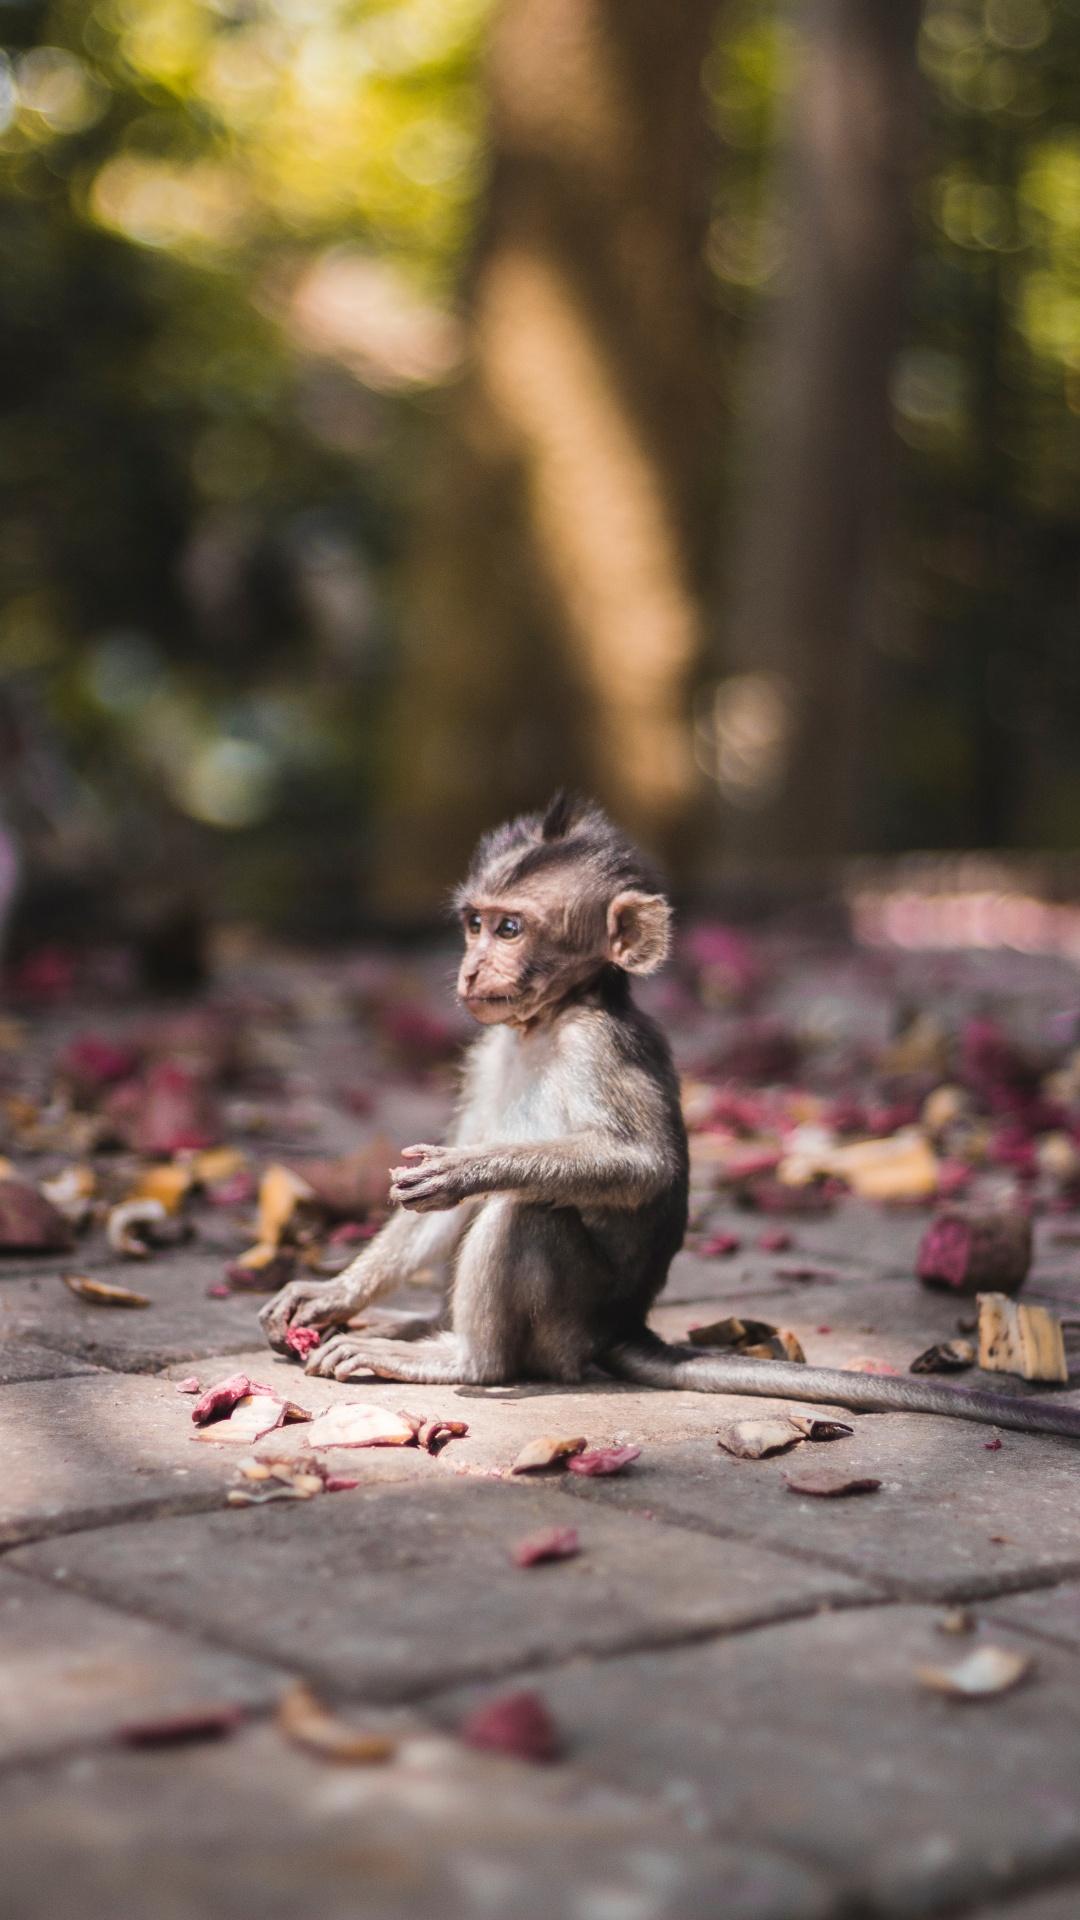 Brown Monkey Sitting on Brown Concrete Floor During Daytime. Wallpaper in 1080x1920 Resolution